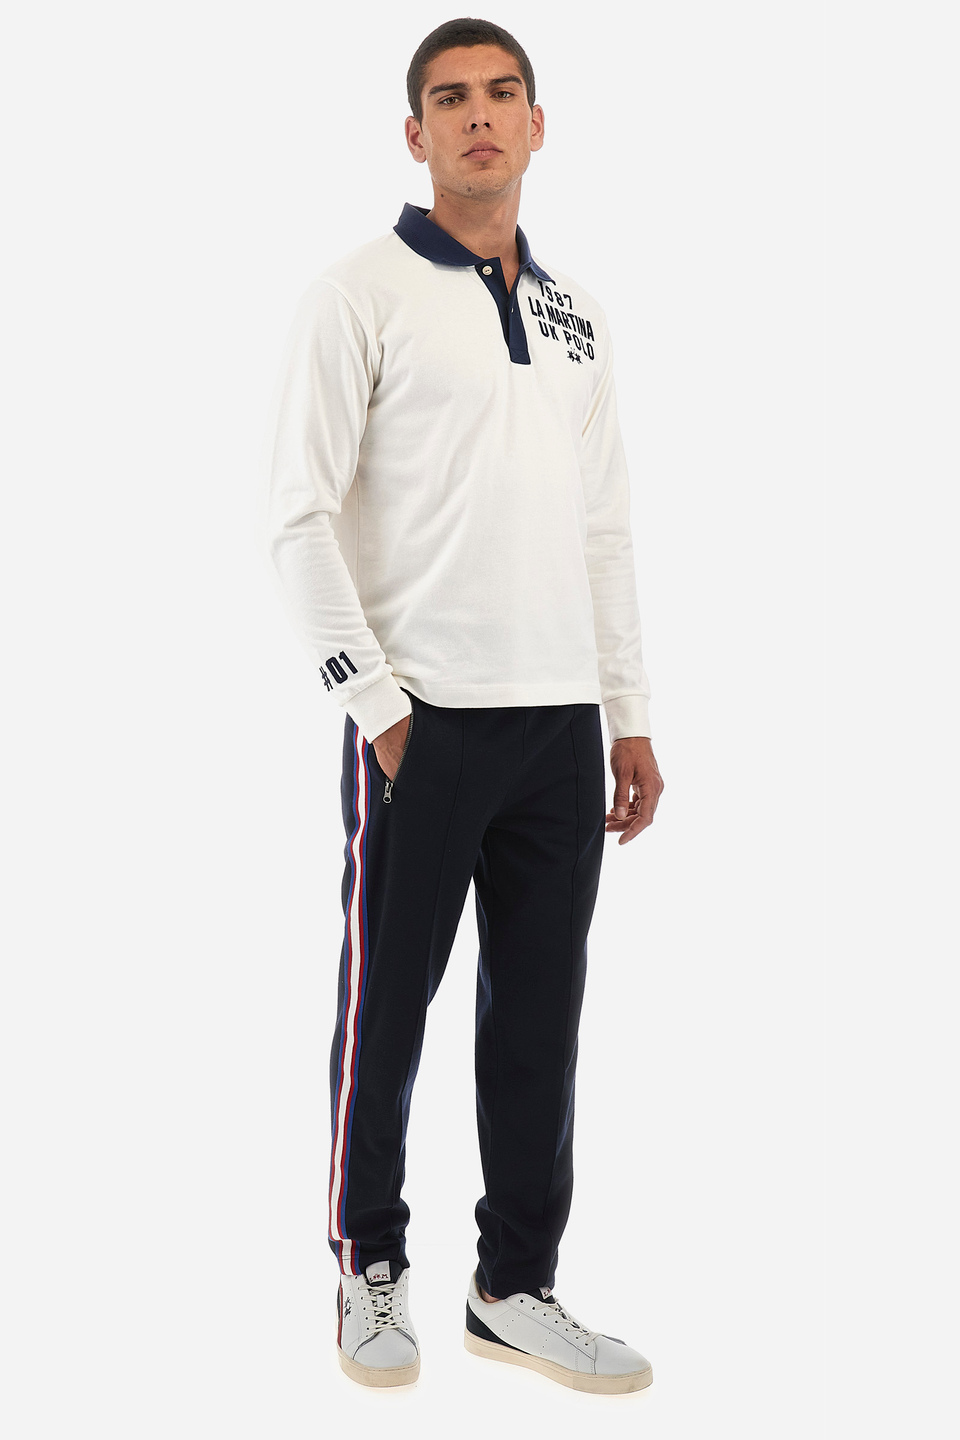 Men's comfort-fit polo shirt - Wilbert | La Martina - Official Online Shop